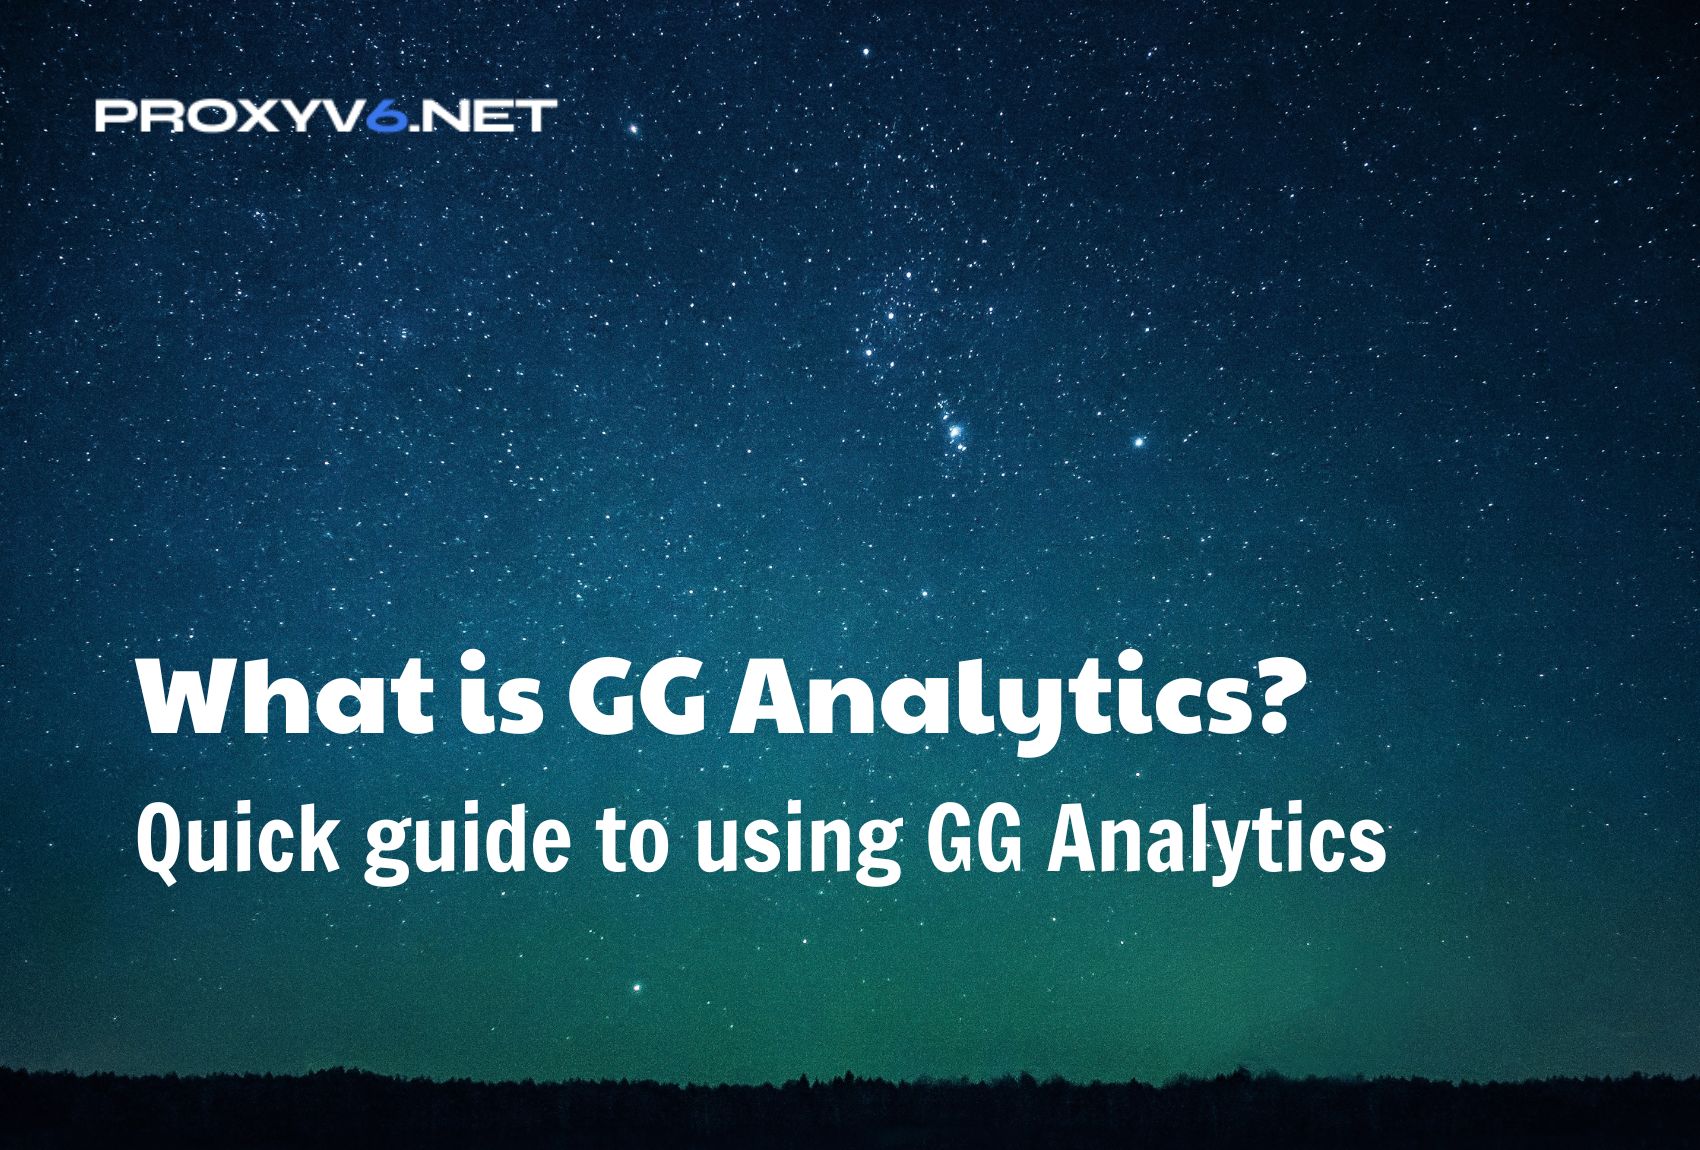 What is GG Analytics? Quick guide to using GG Analytics